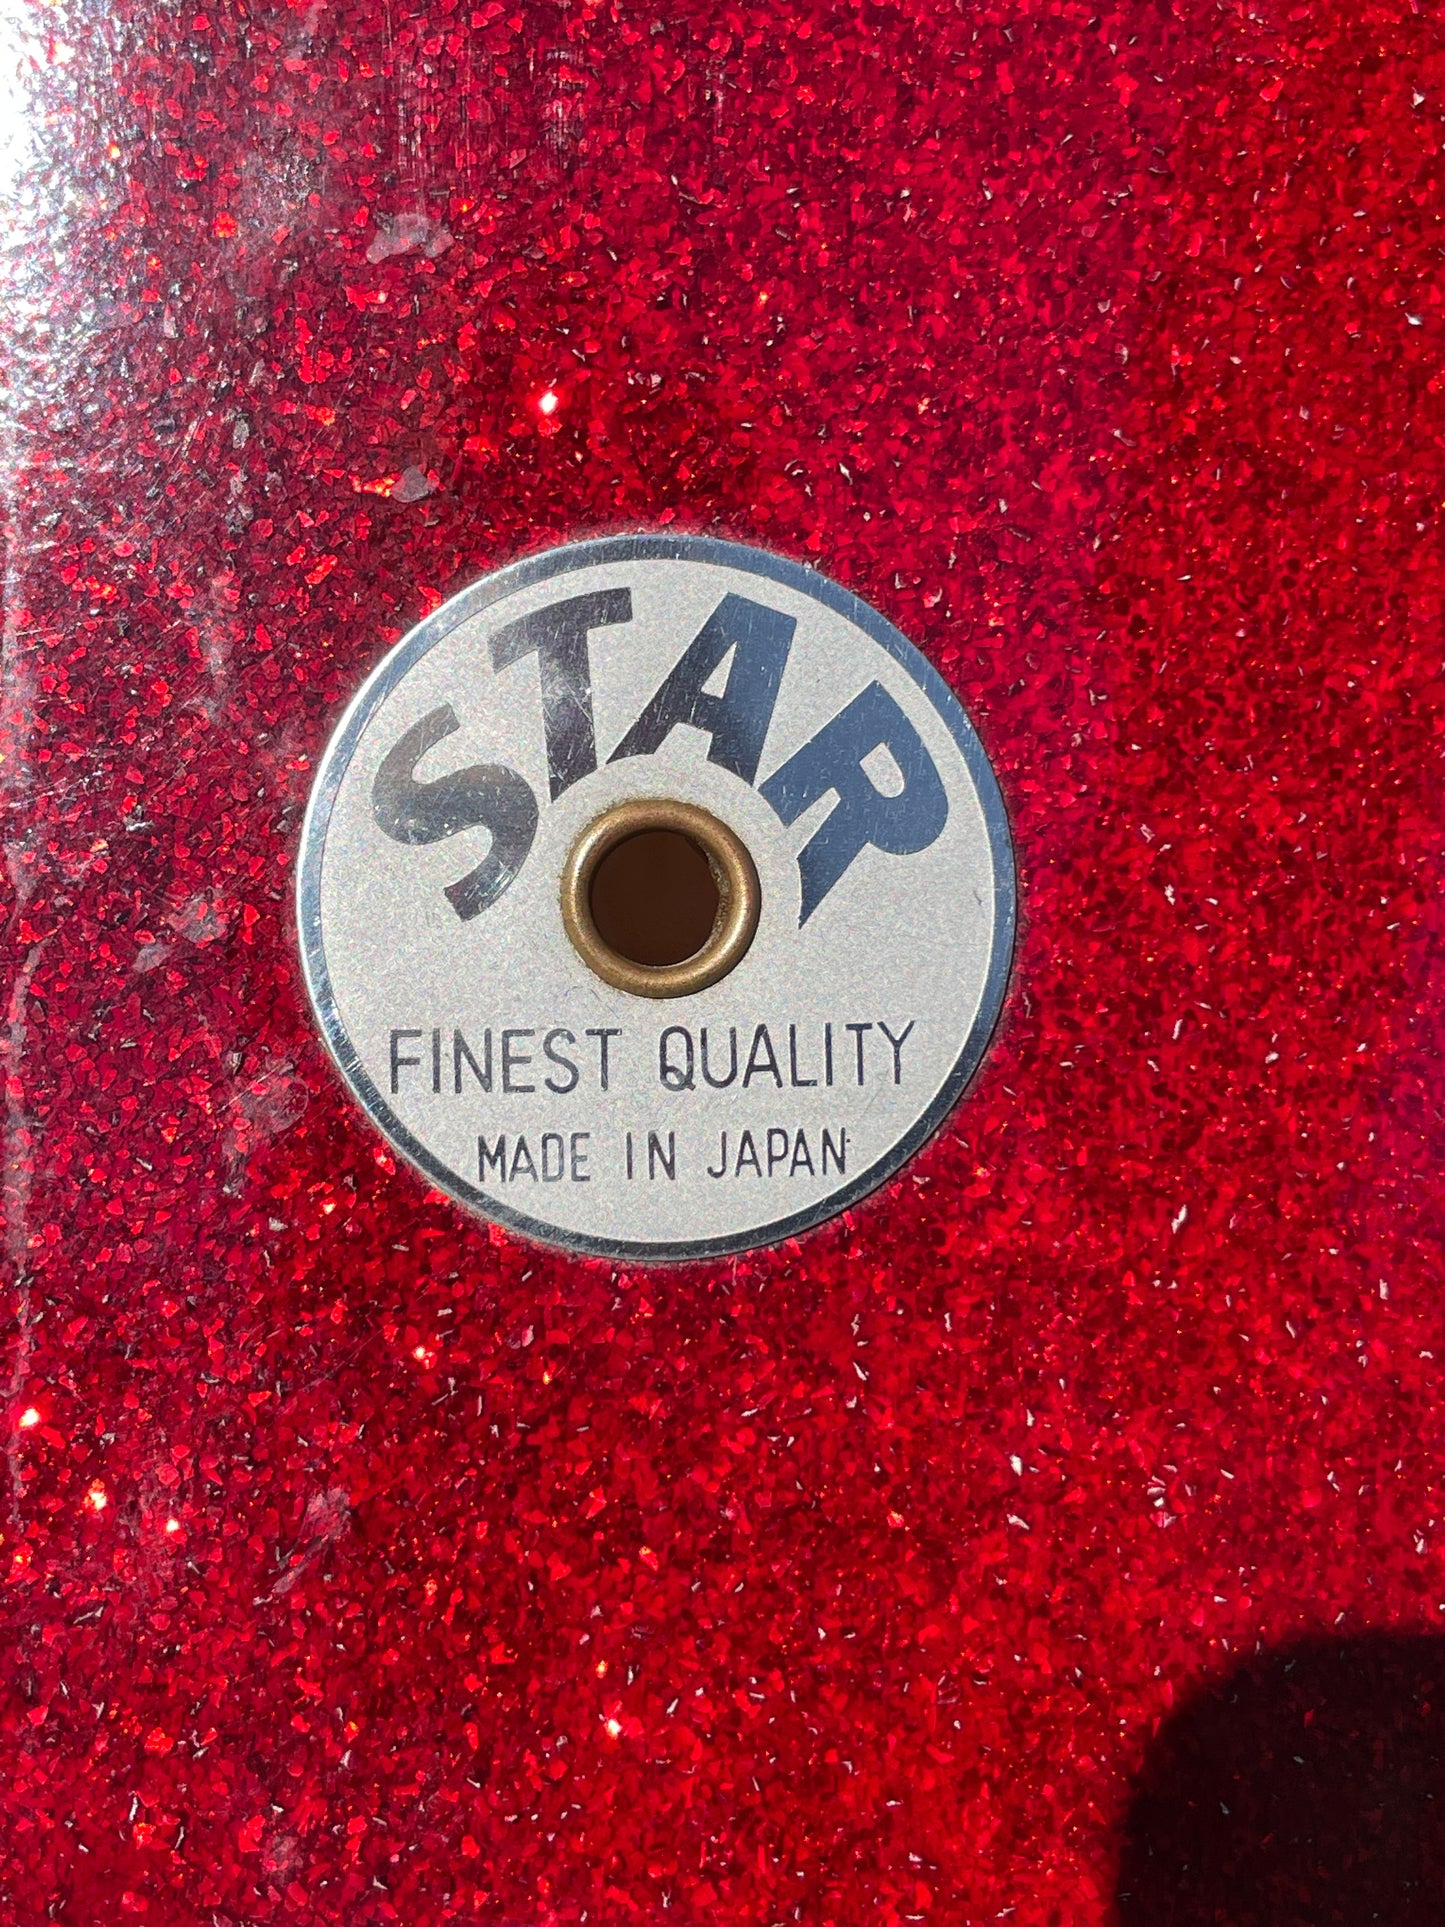 1960s Star 14x16 Bass Drum Red Sparkle MIJ Pre-Tama